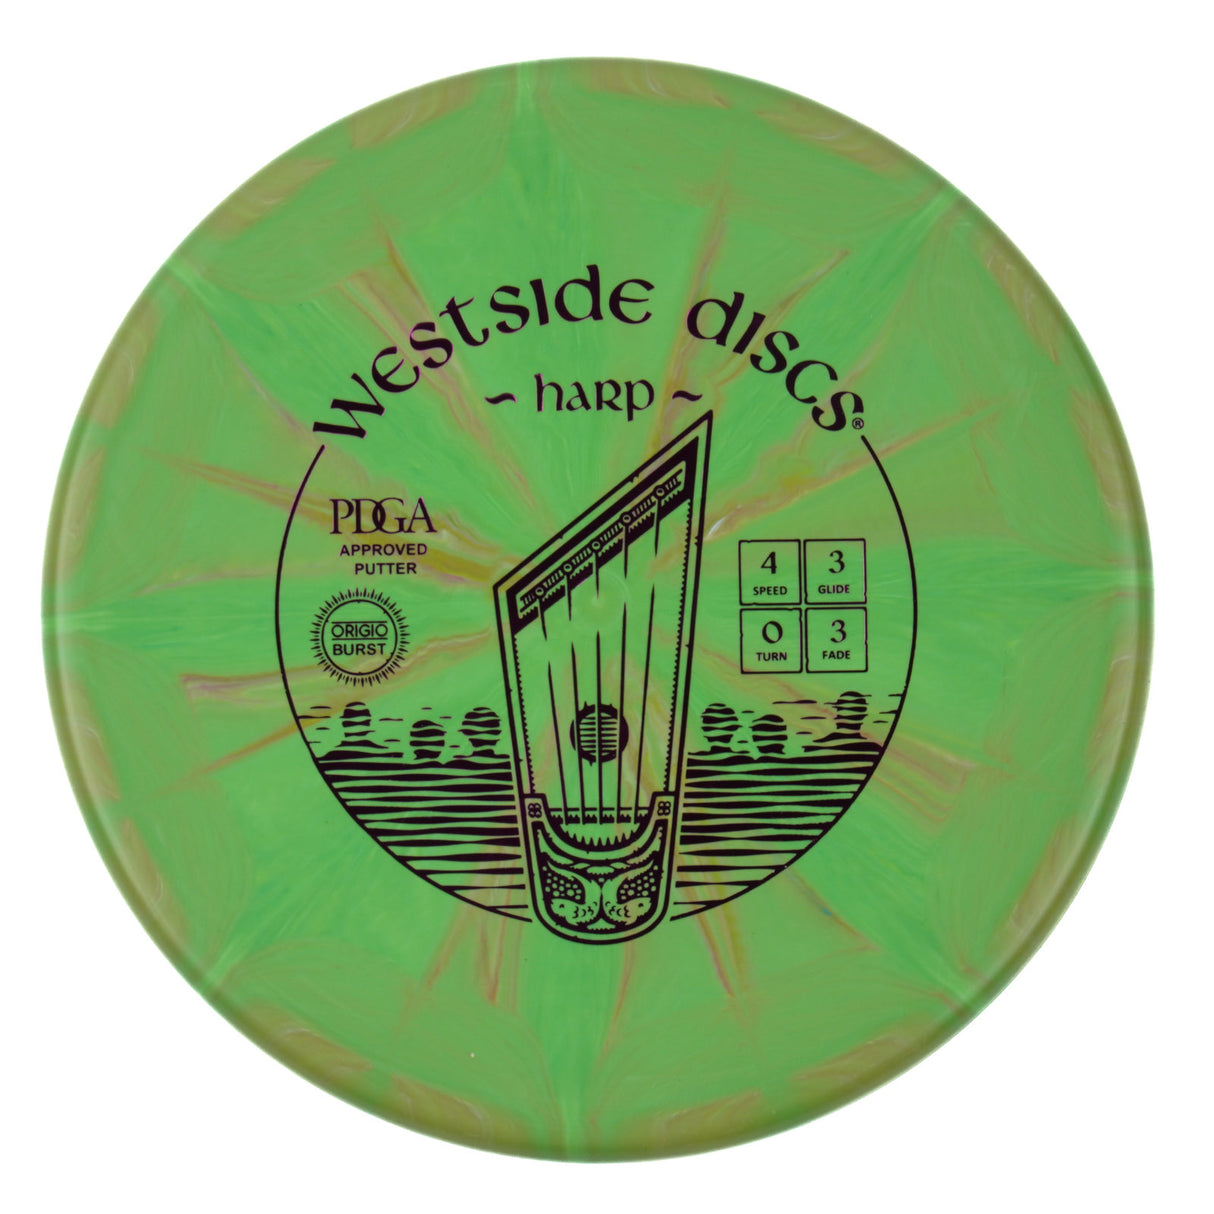 Westside Harp - Origio Burst 176g | Style 0004